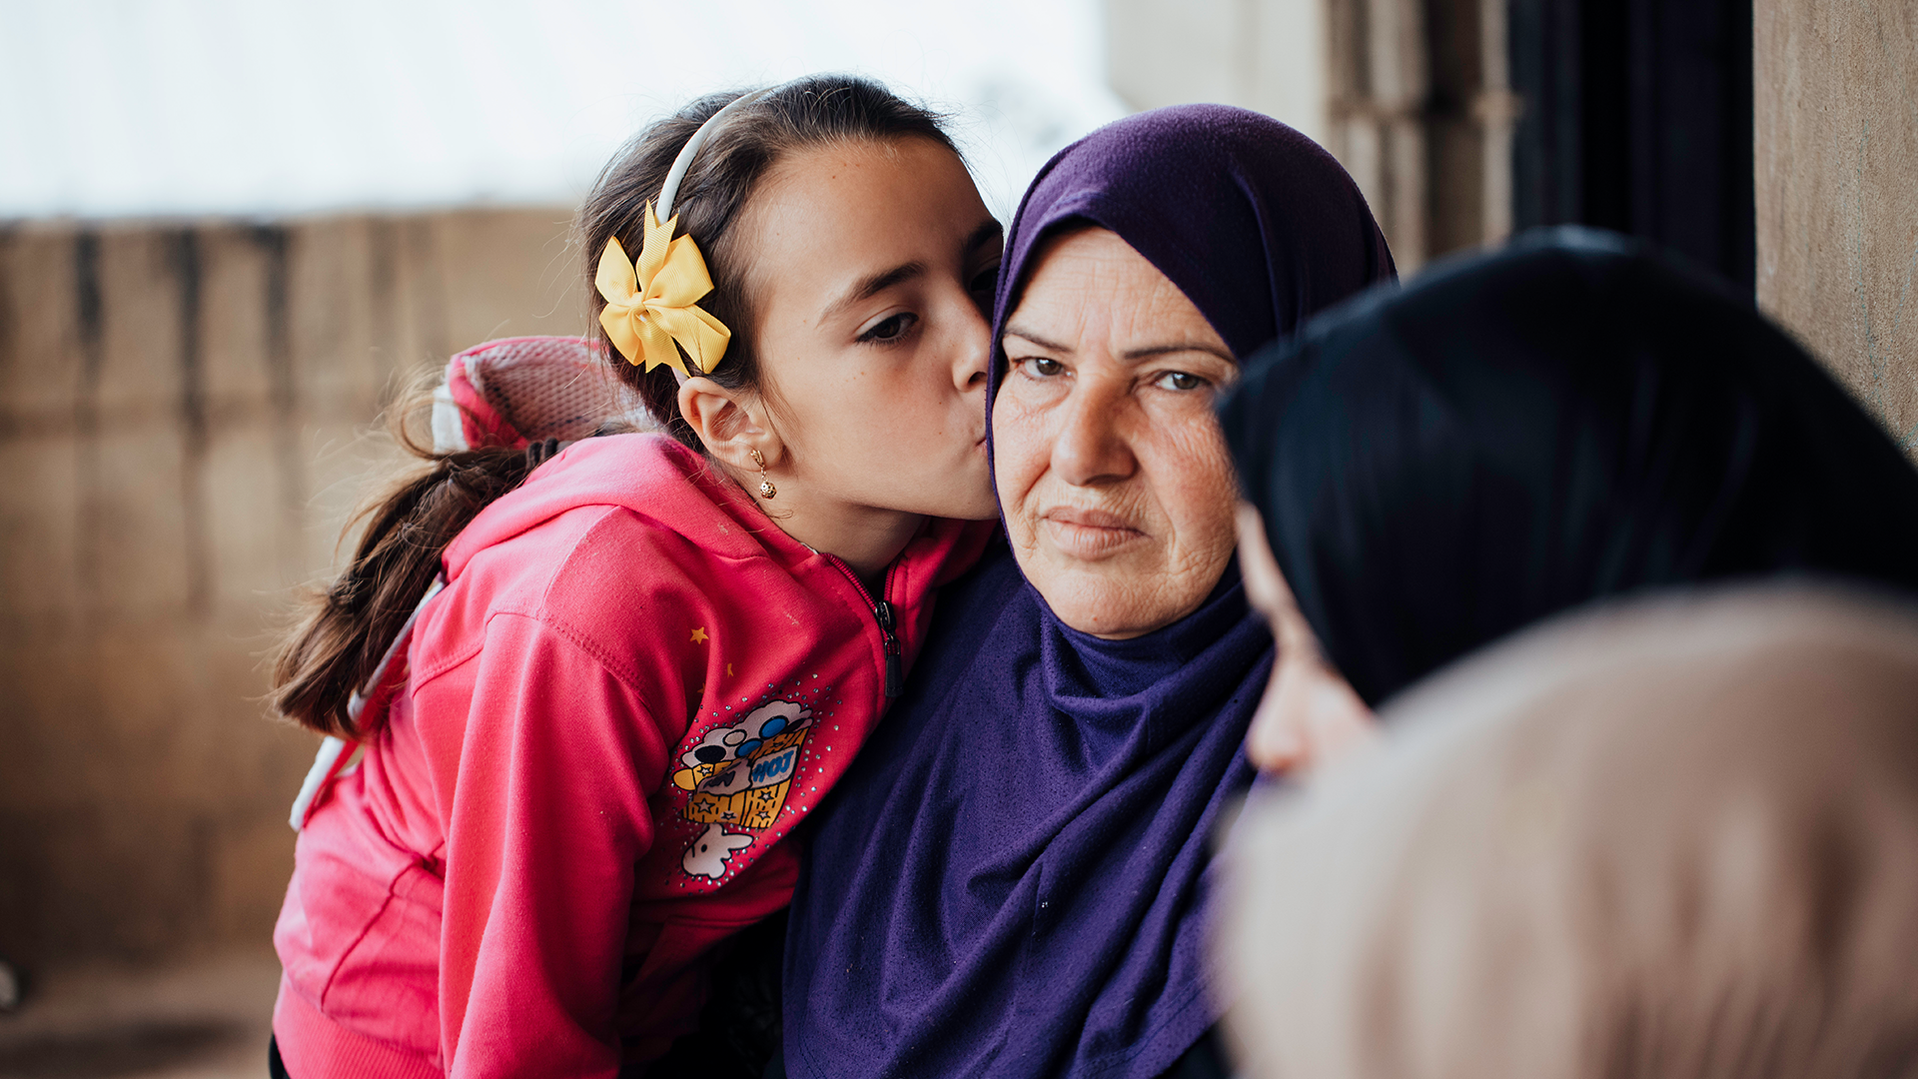 War Child veilige plekken - Amals familie uit Syrië - nu in Libanon